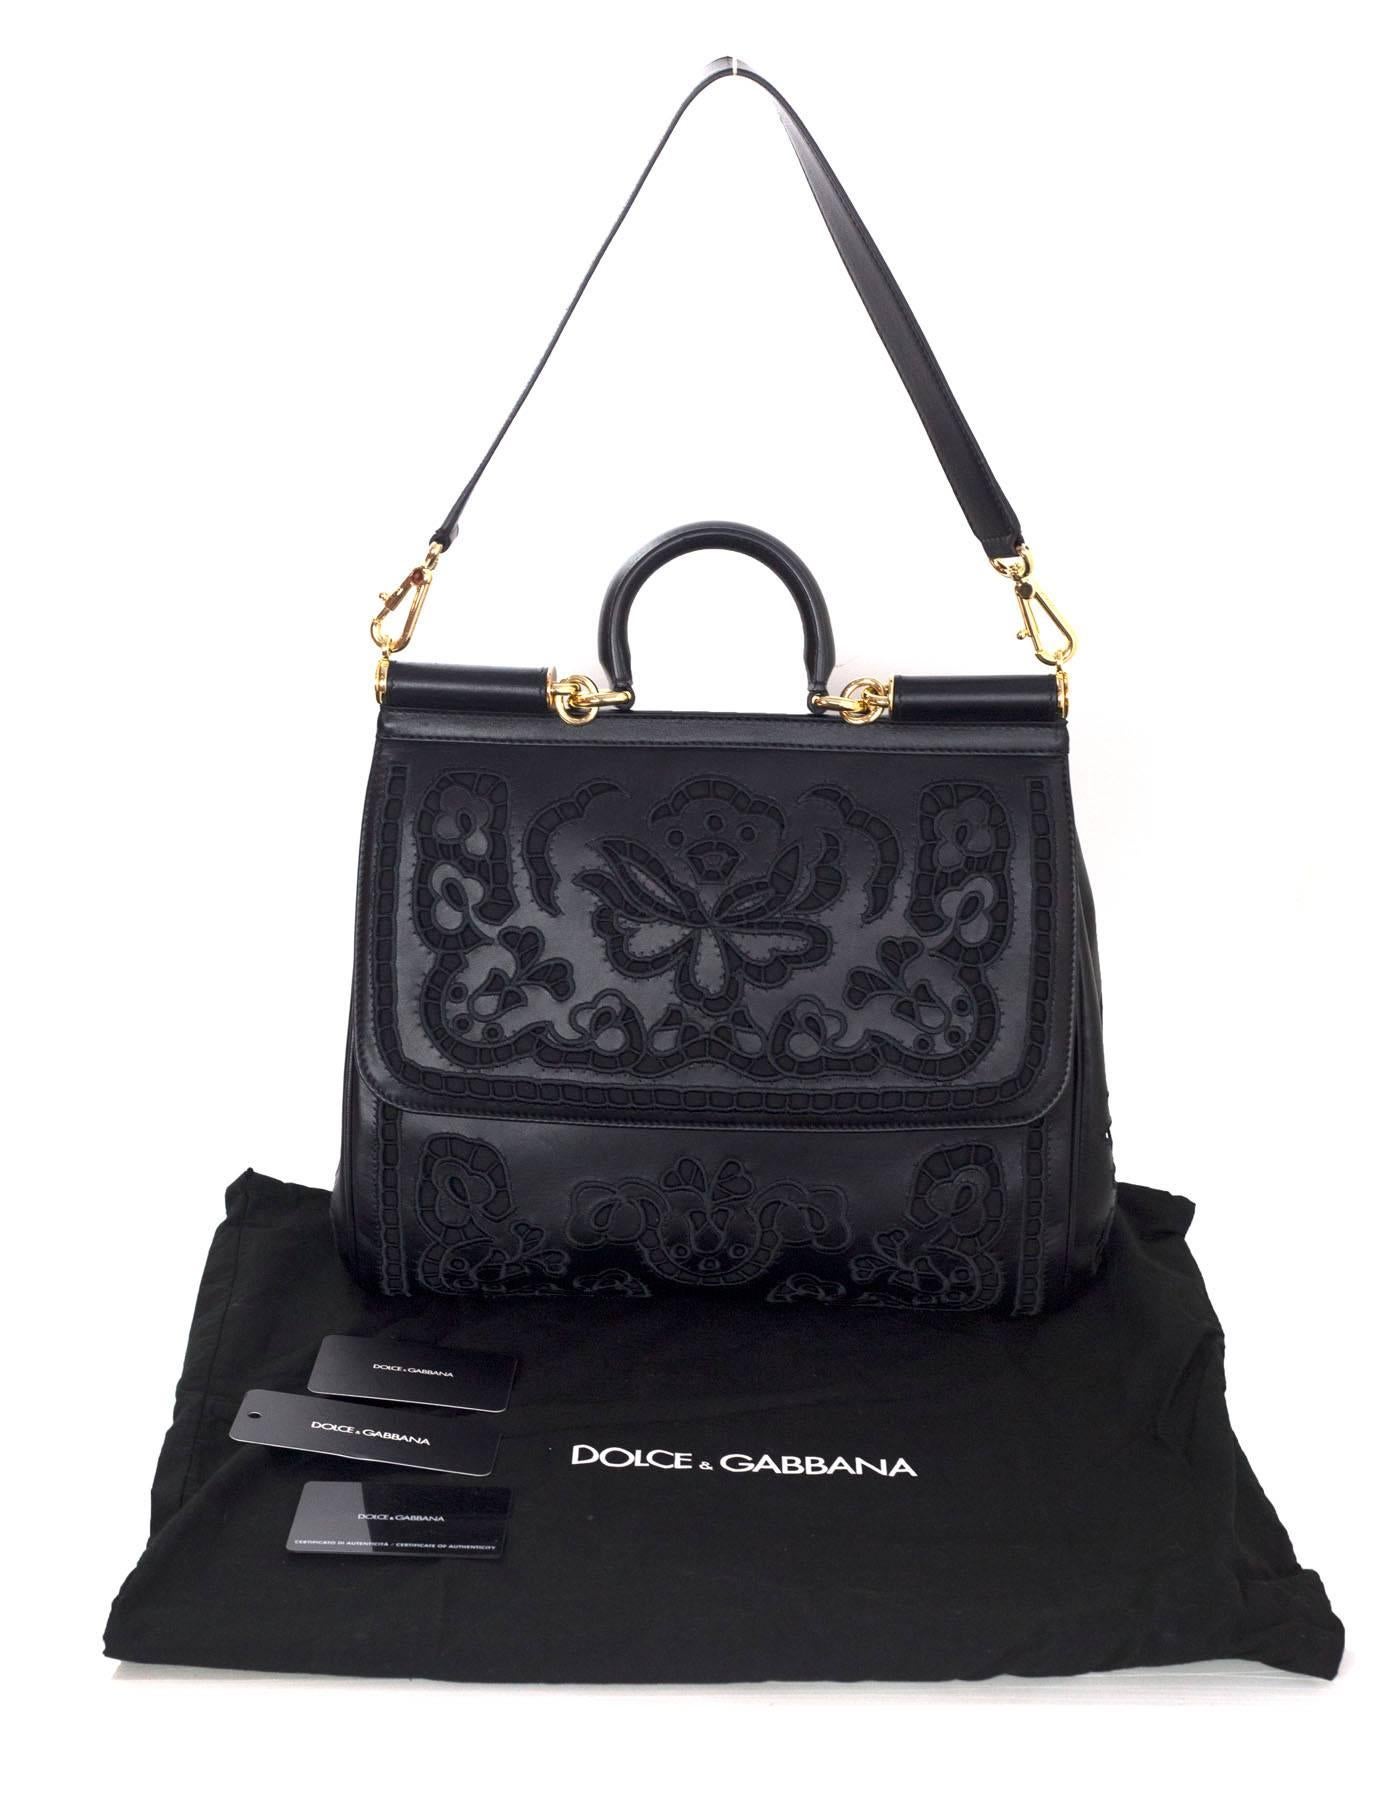 Dolce & Gabbana Black Laser Cut Lace Miss Sicily Handle Bag 4